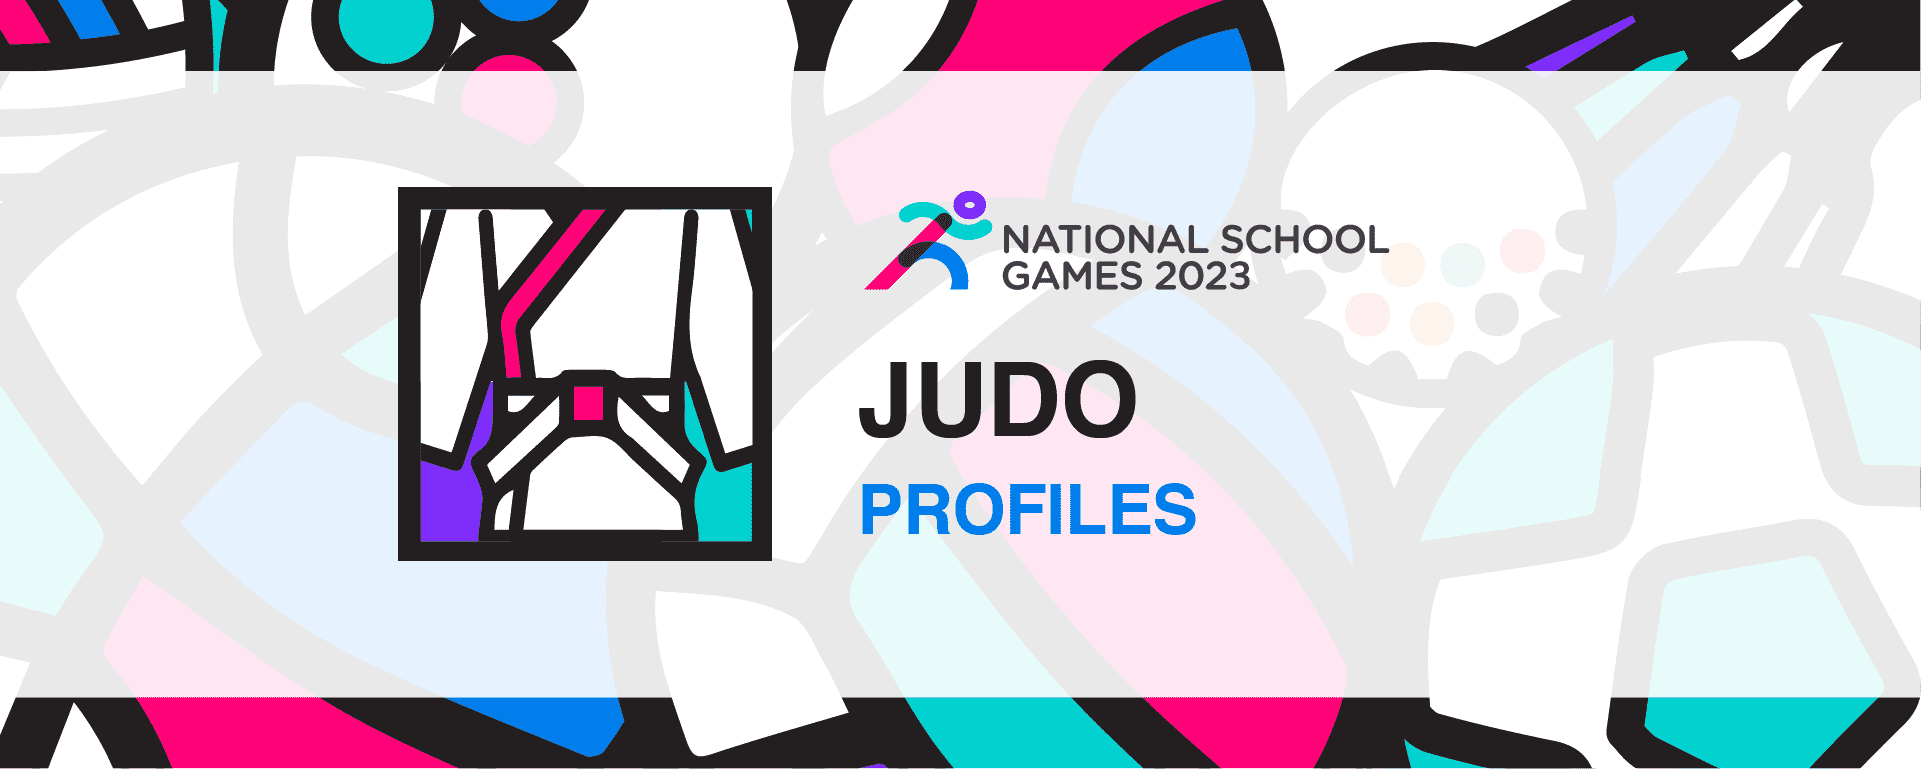 National School Games 2023 | Judo | Profiles